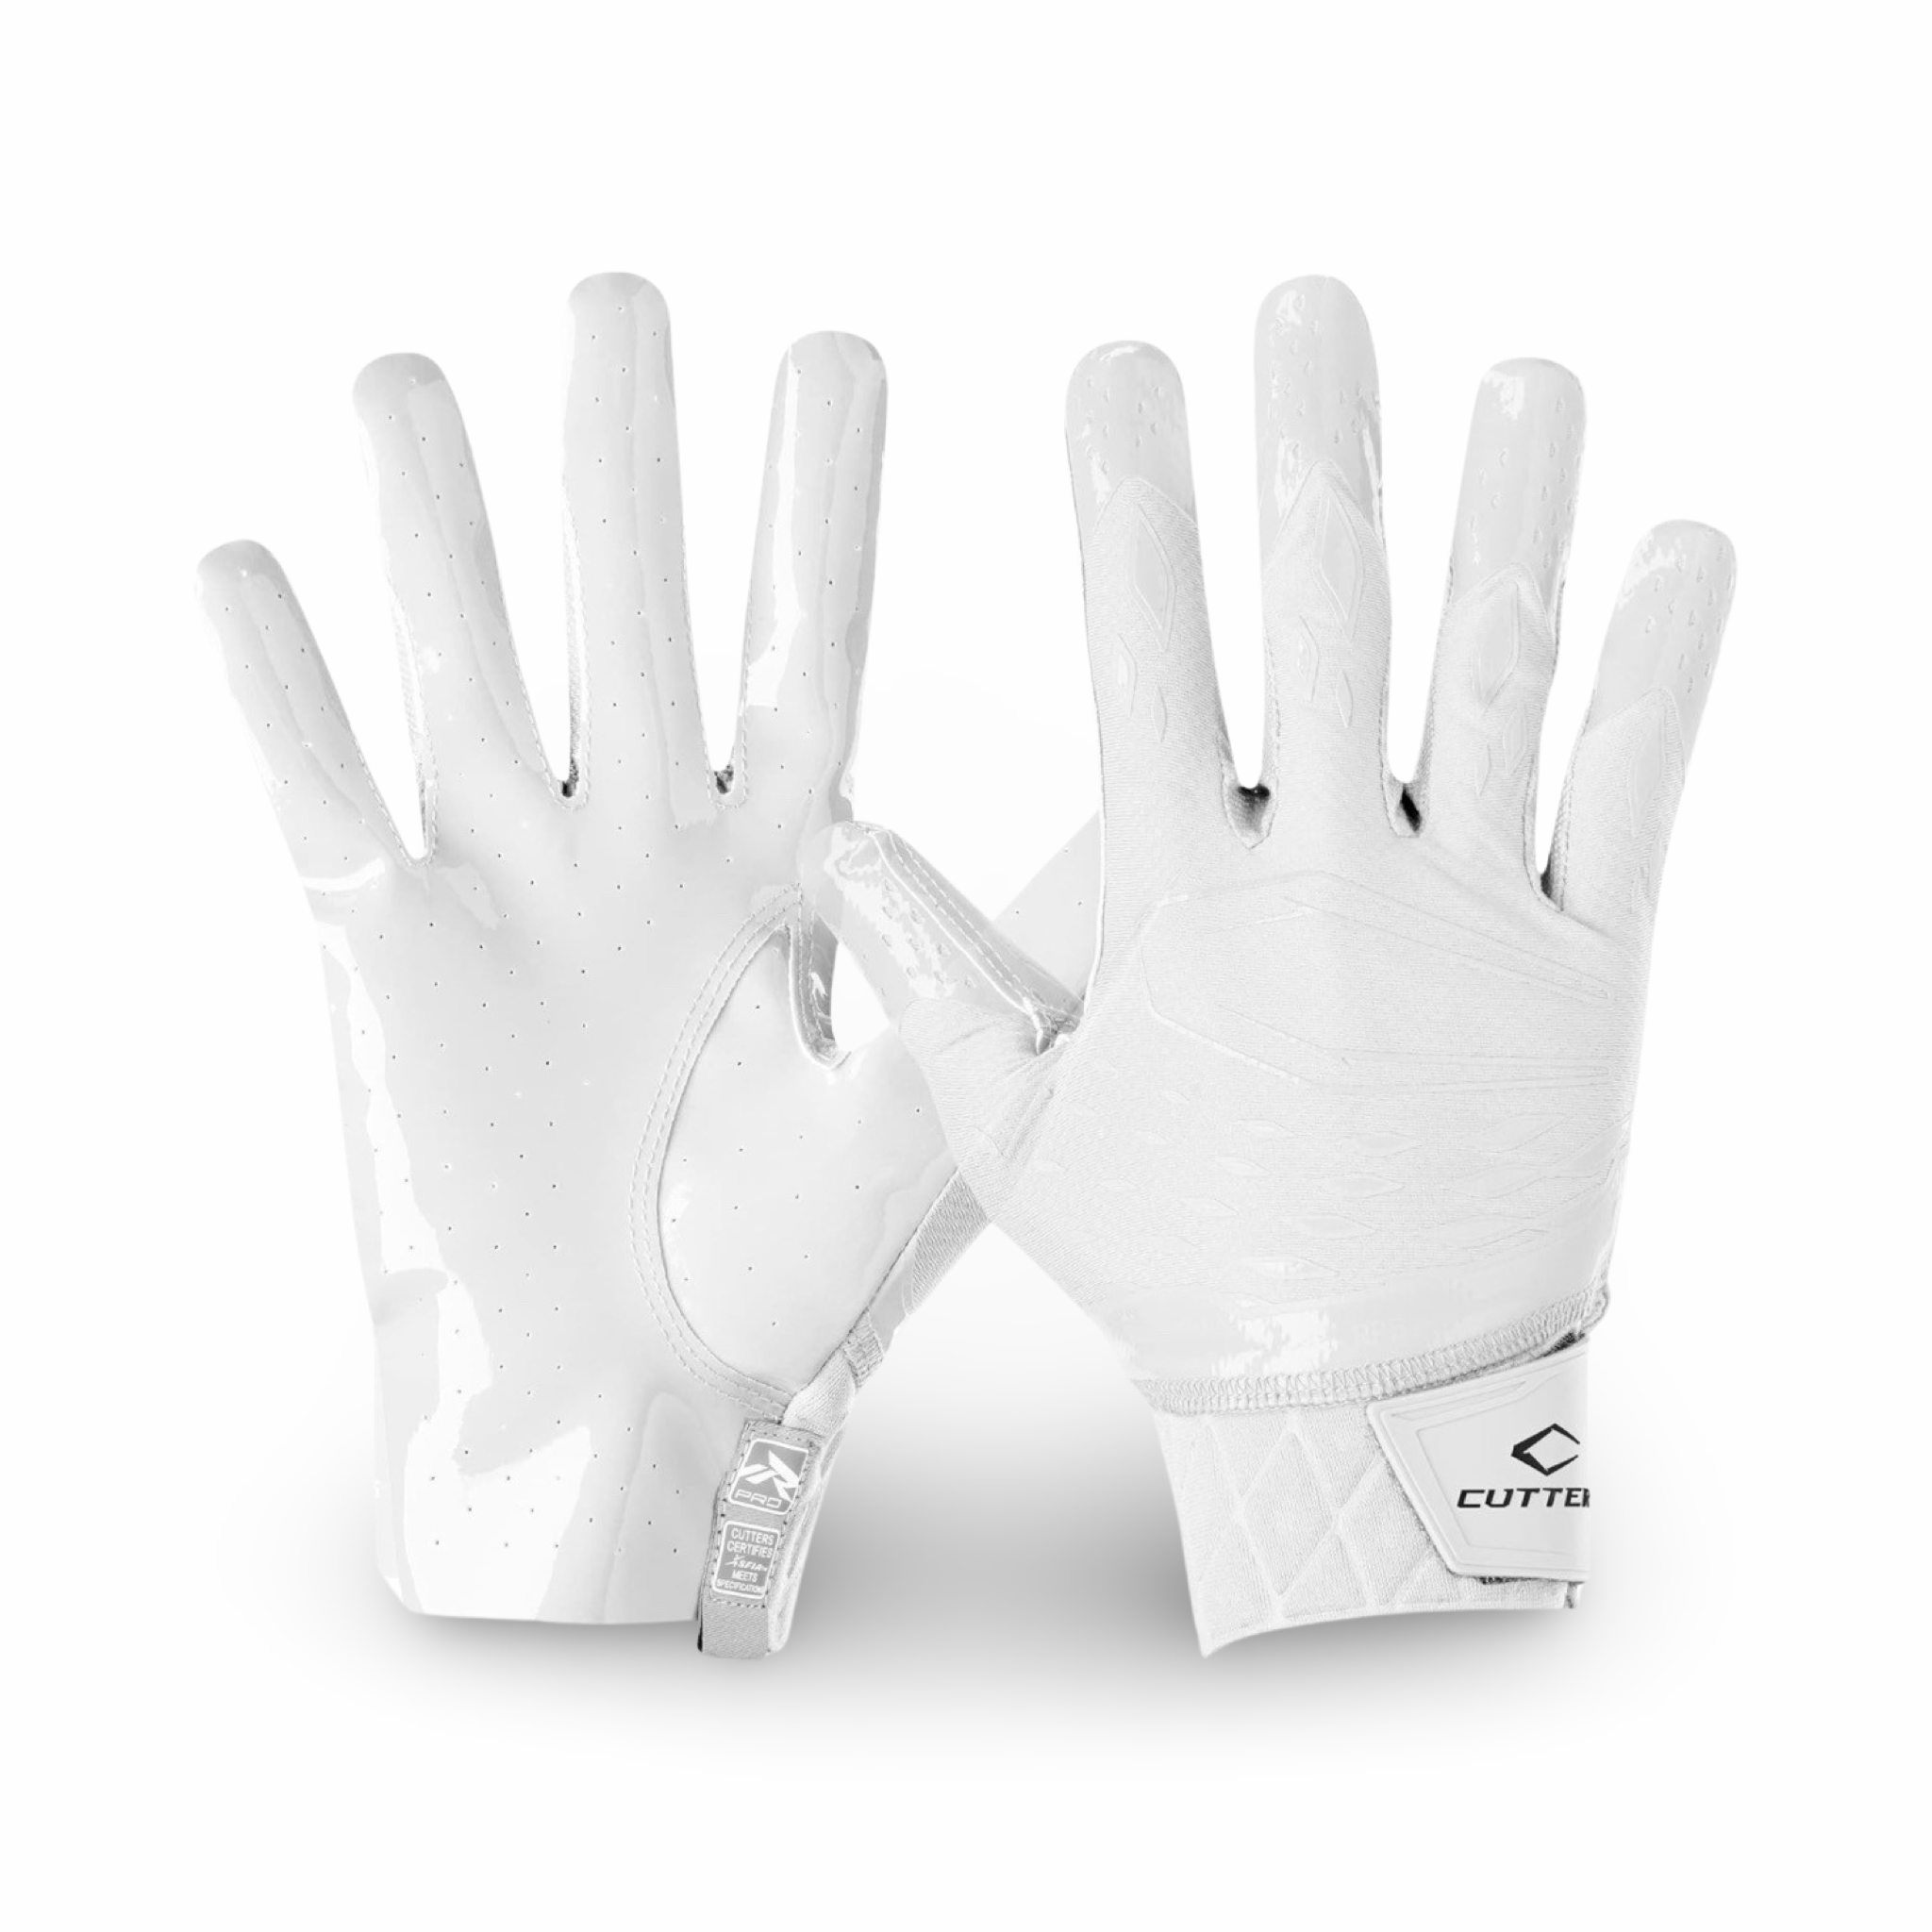 Cutters Men's Rev Pro 5.0 Receiver Football Gloves 